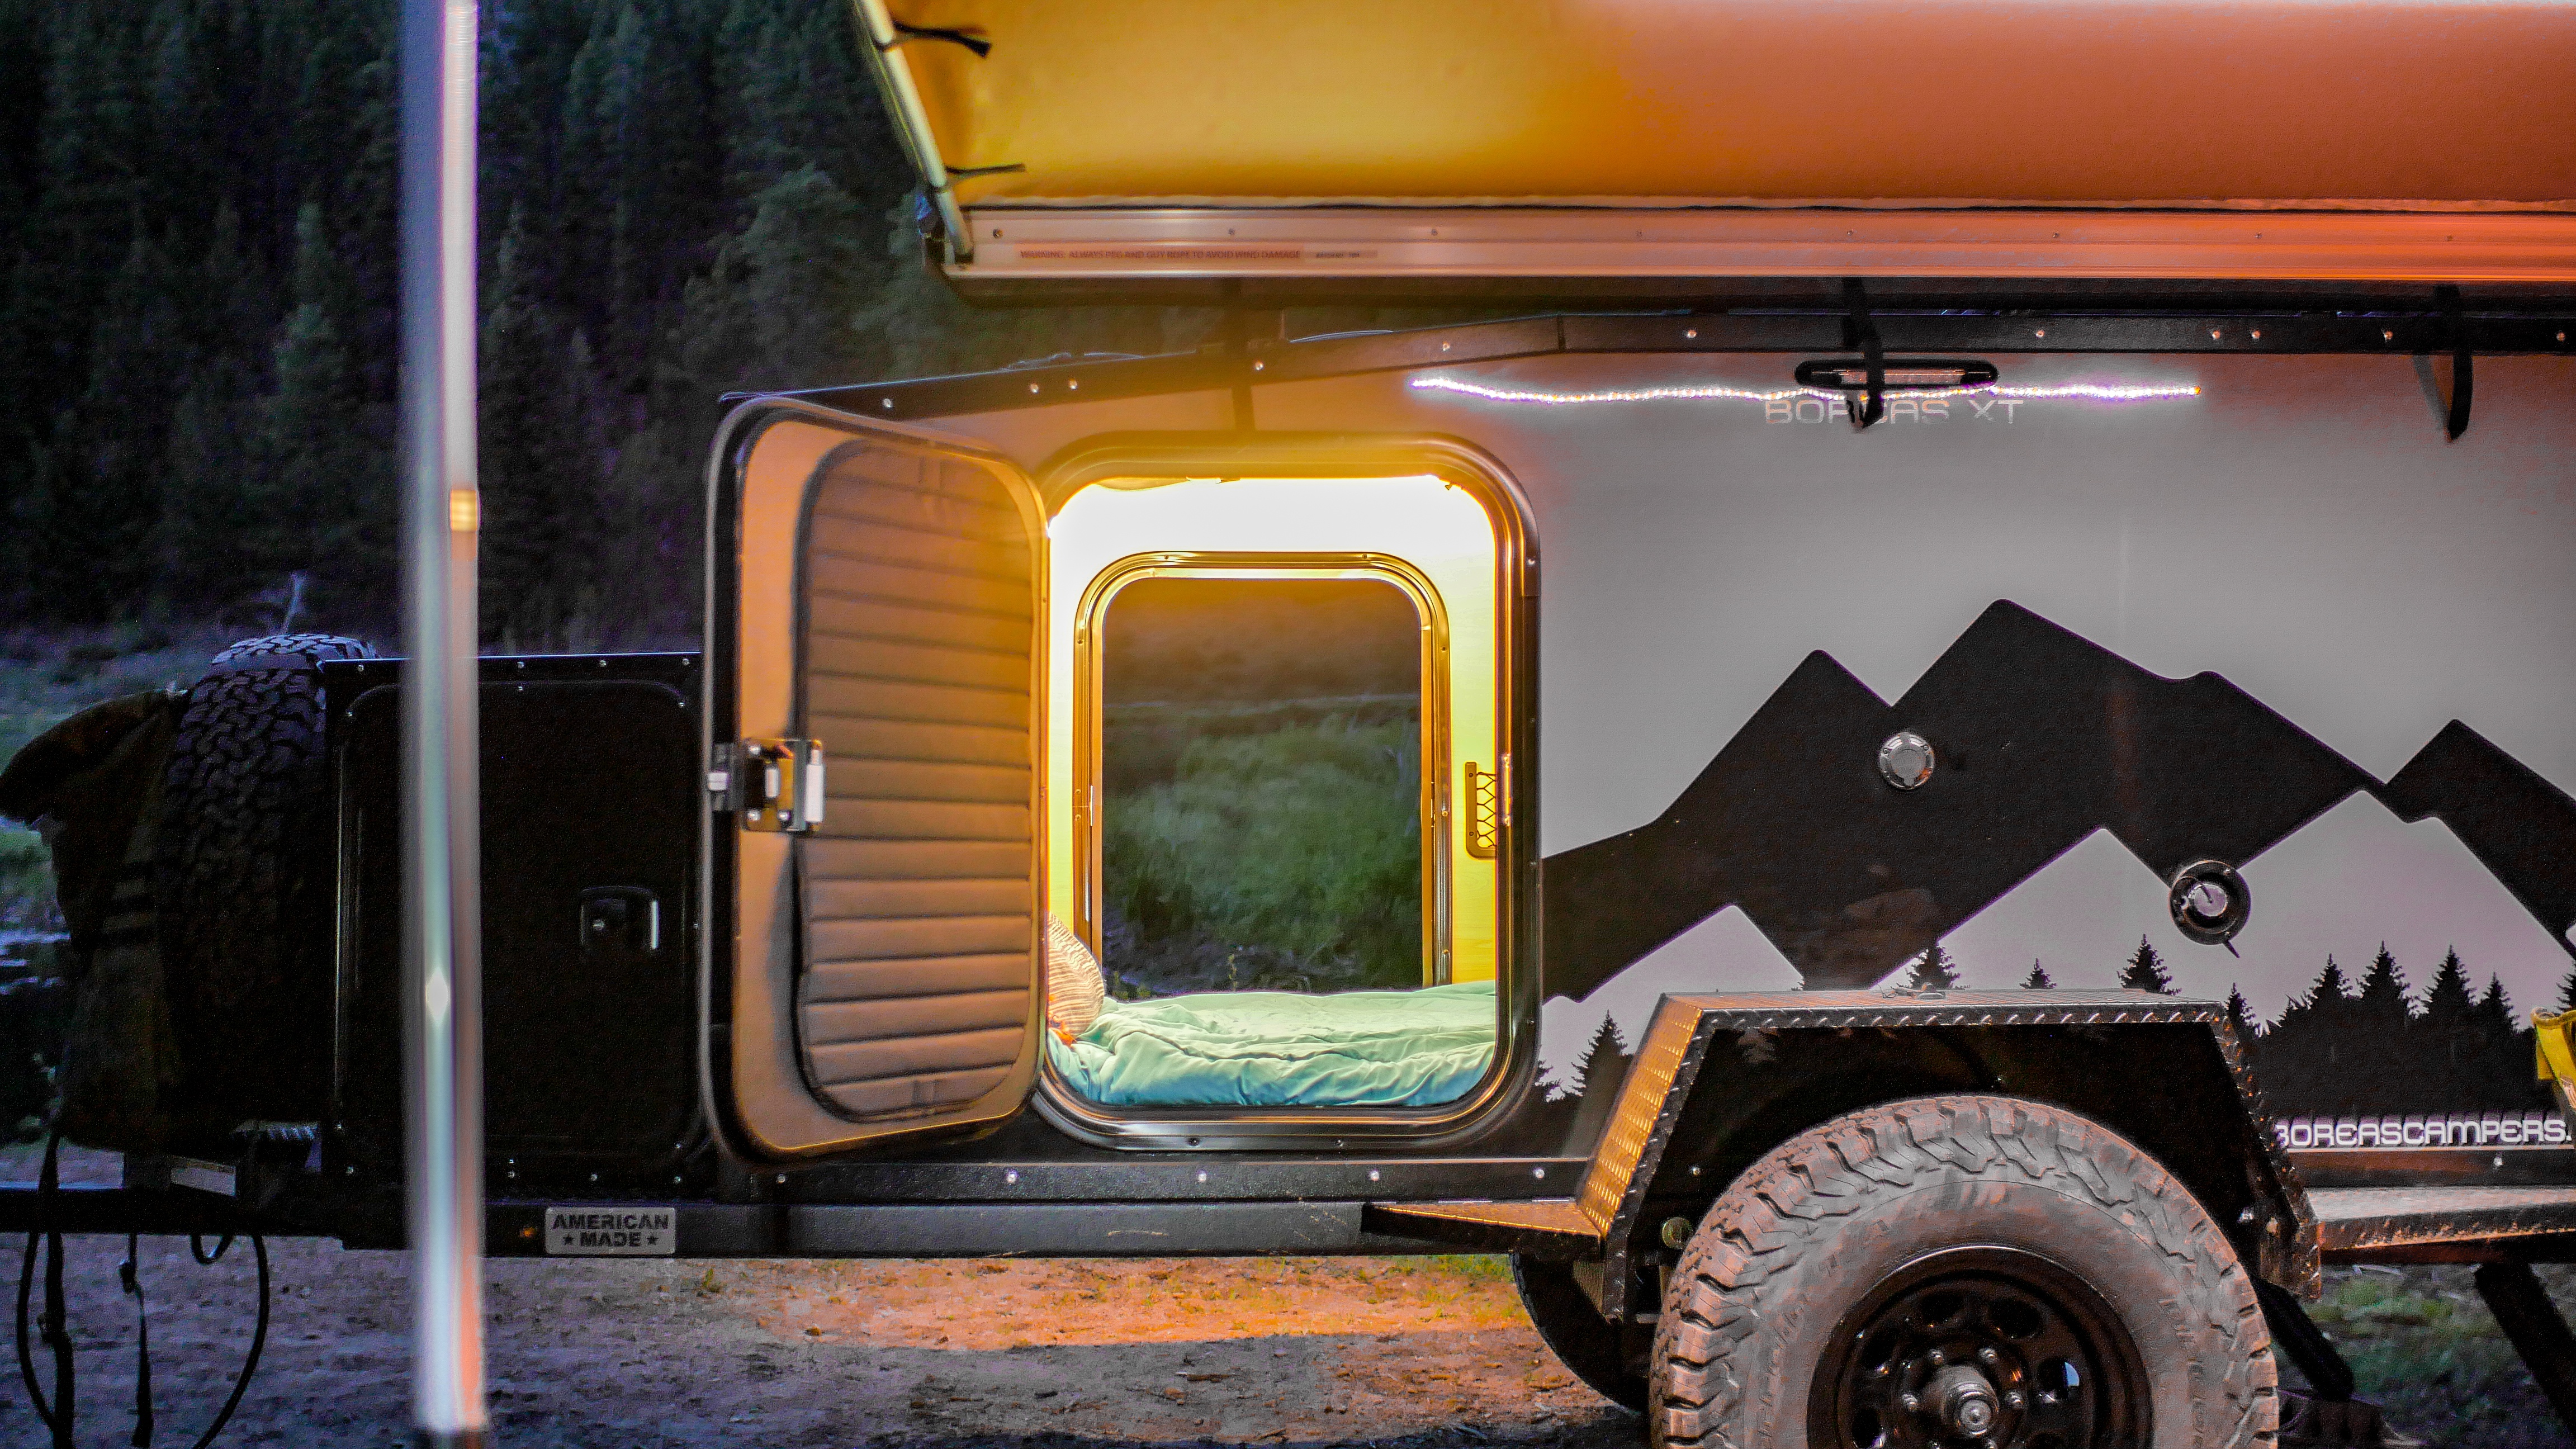 LED lights in an offroad camper trailer